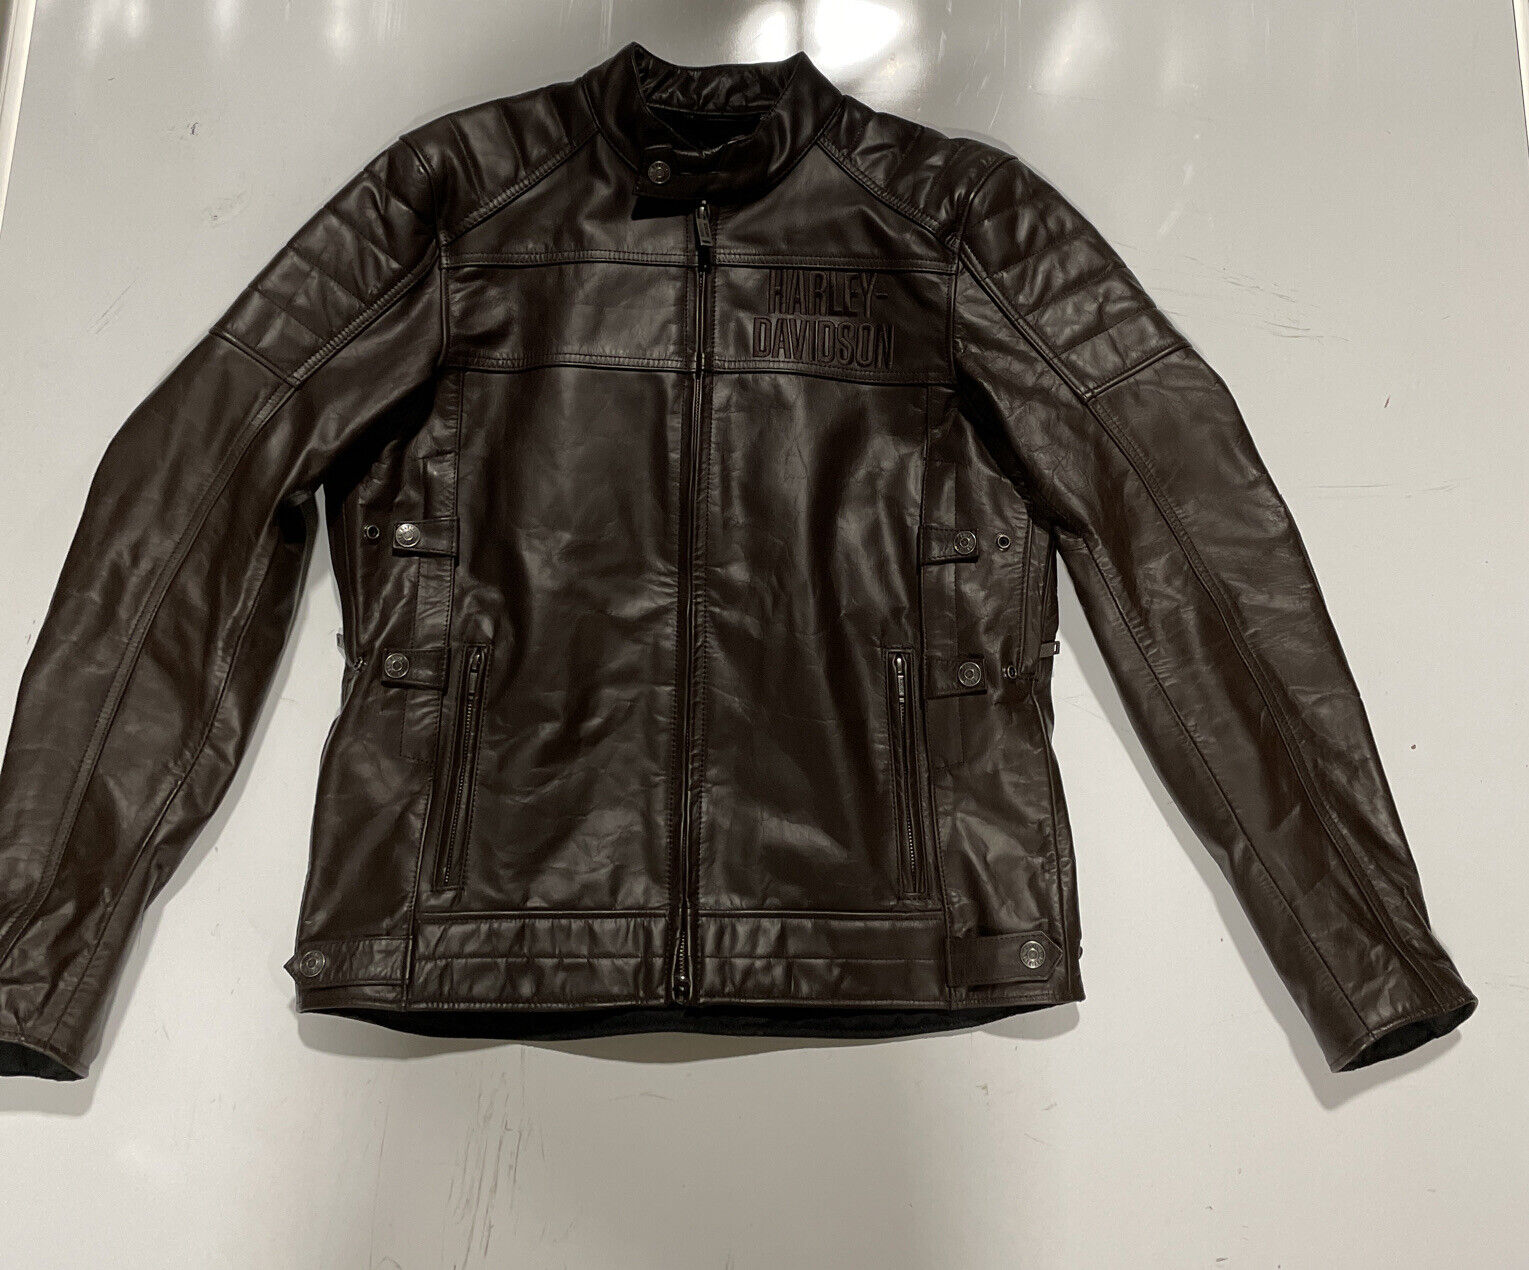 Harley Davidson Leather Jacket 97031-22vm/000m Size Medium Brand New NWT